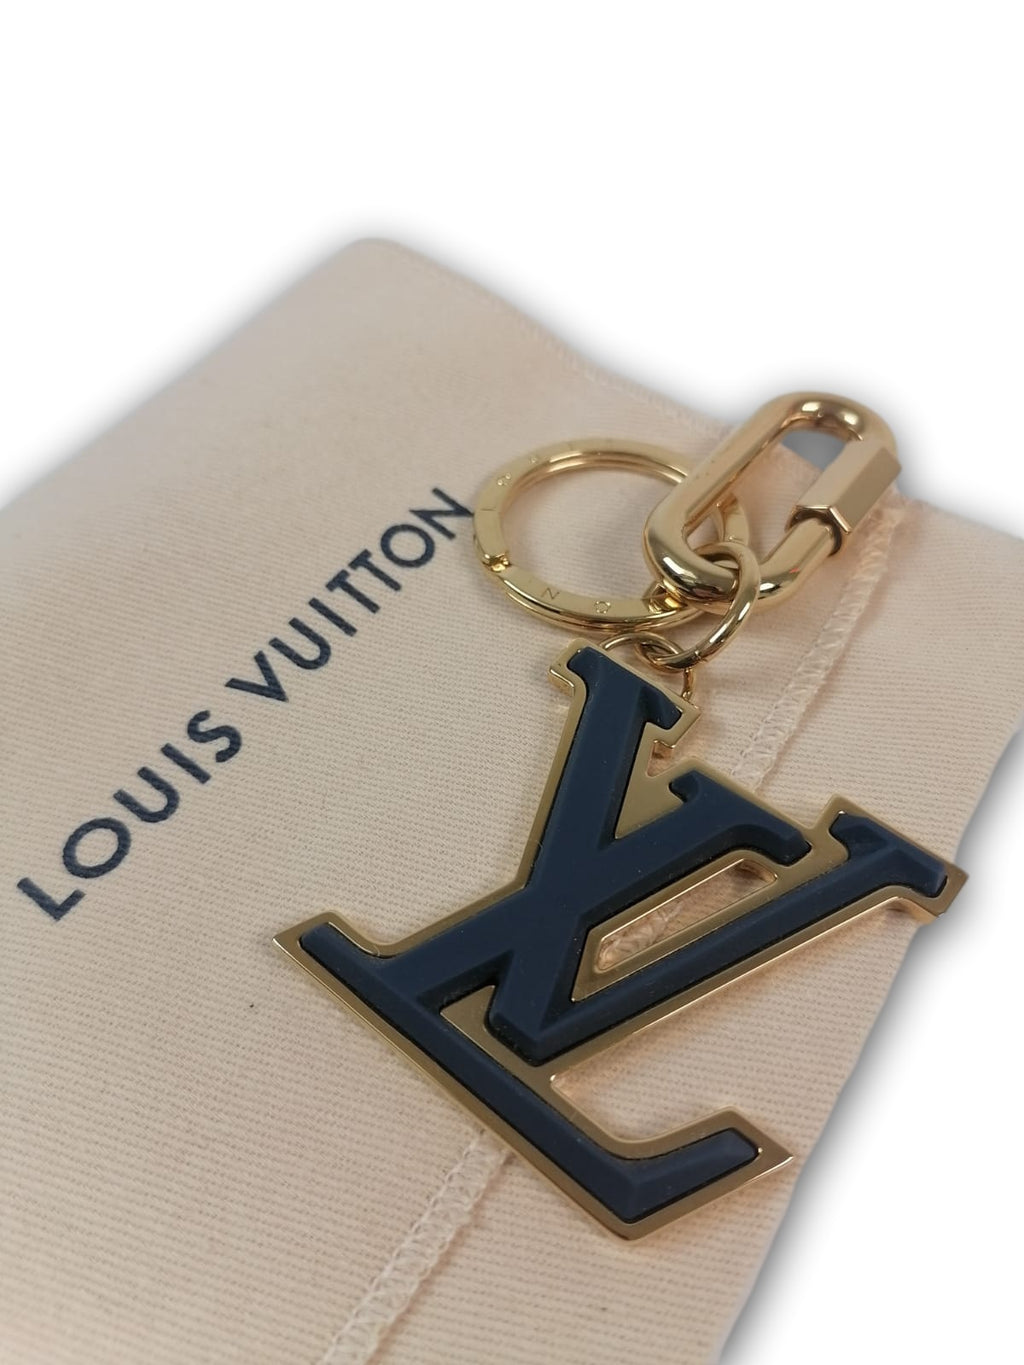 Louis Vuitton Monogram Canvas Trunks Bag Charm & Key Holder